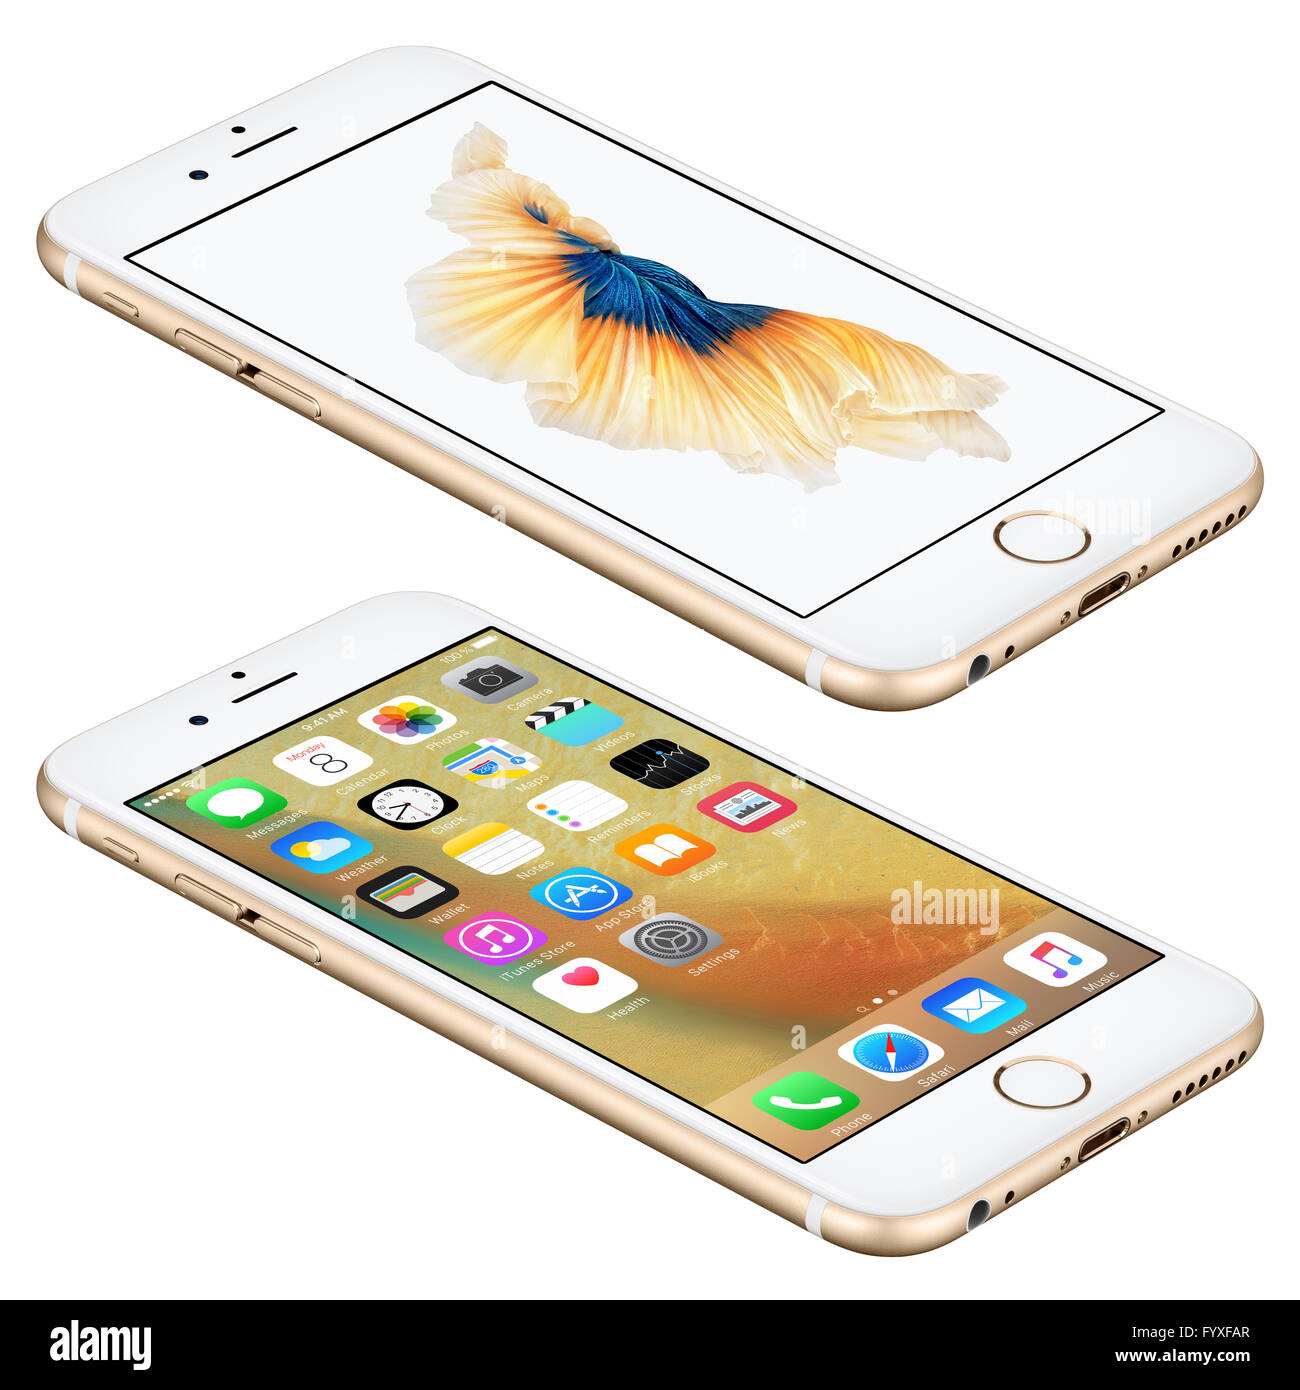 Varna, Bulgarien - 25. Oktober 2015: Gold Apple iPhone 6 s liegt auf der Oberfläche mit mobilen Betriebssystem iOS 9 Stockfoto